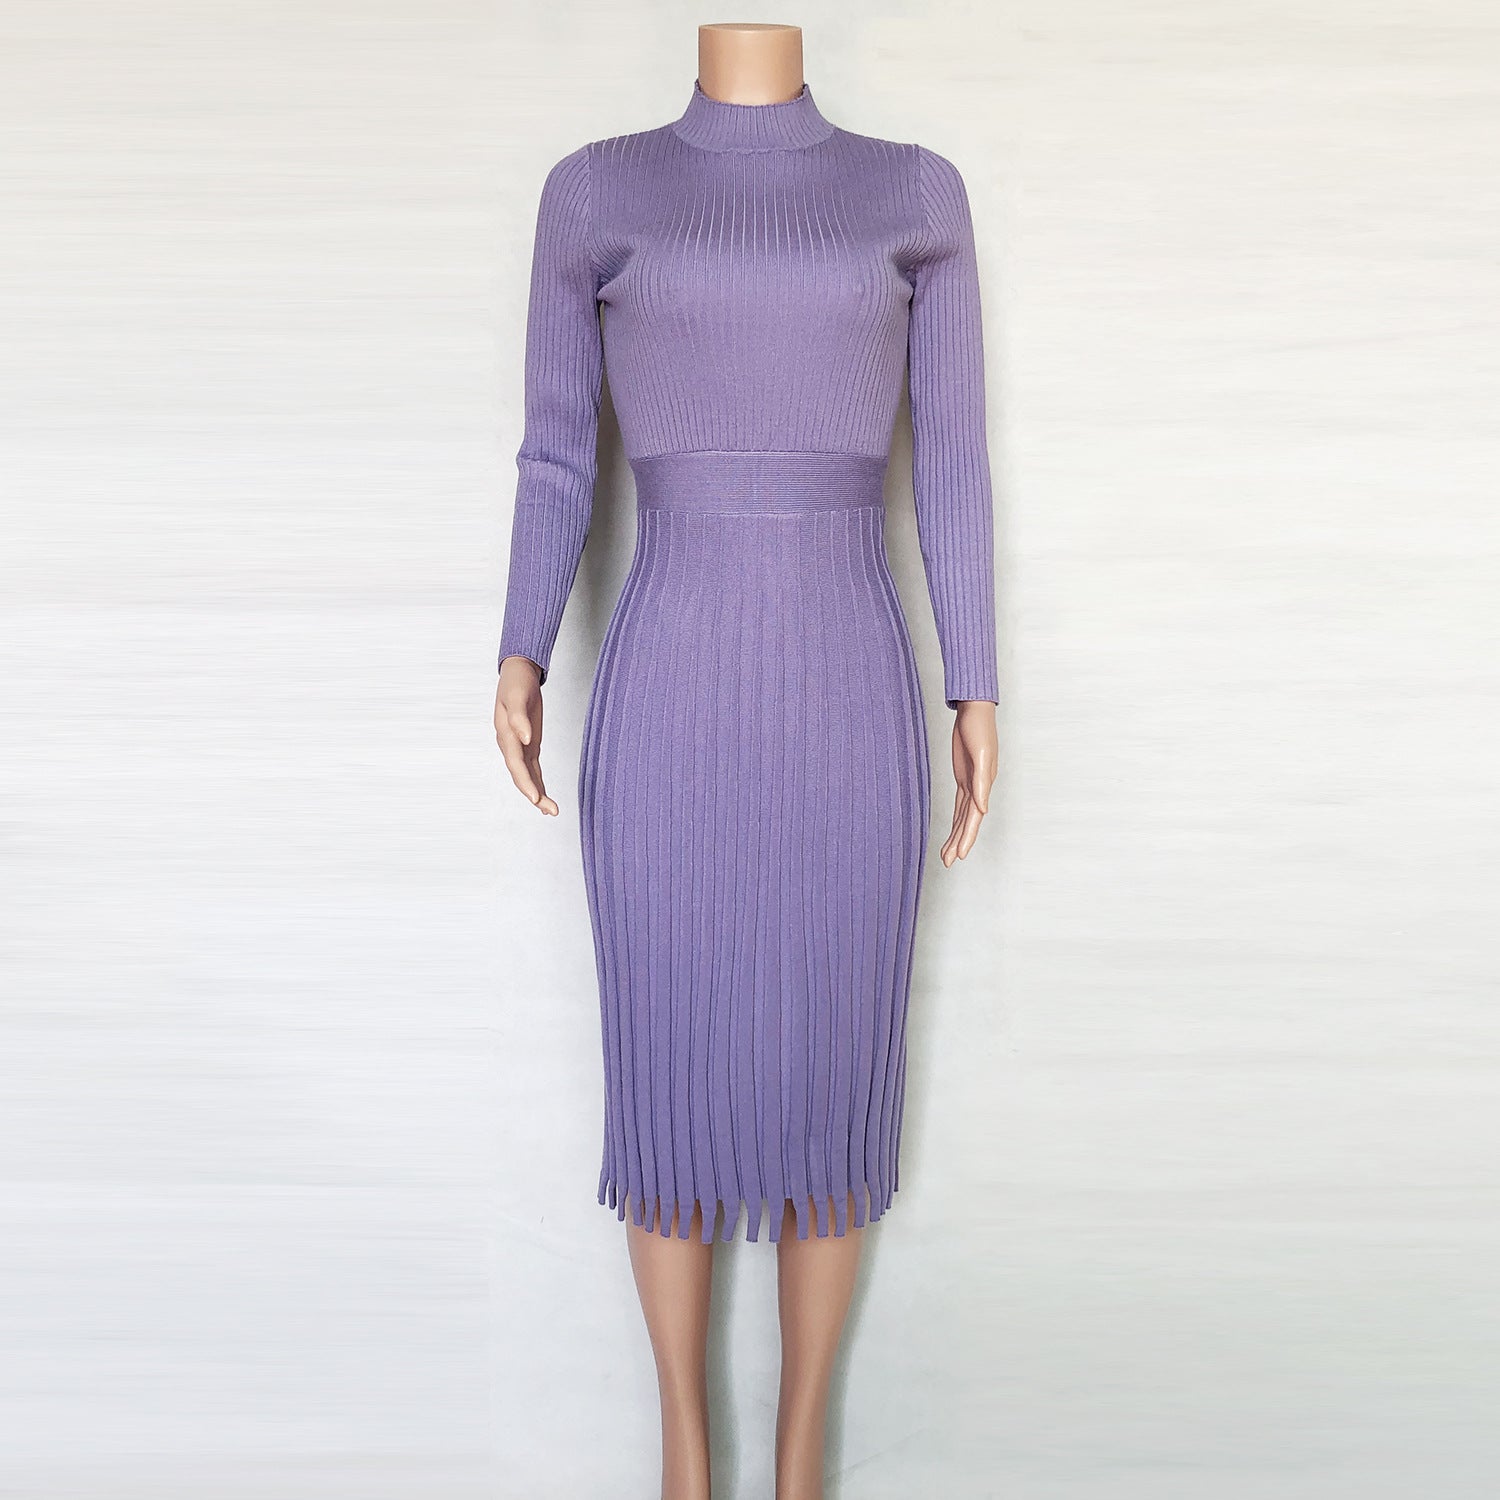 Hot Selling Fashion Women Midi Length Fall Dresses-Dresses-Pink-S-Free Shipping Leatheretro